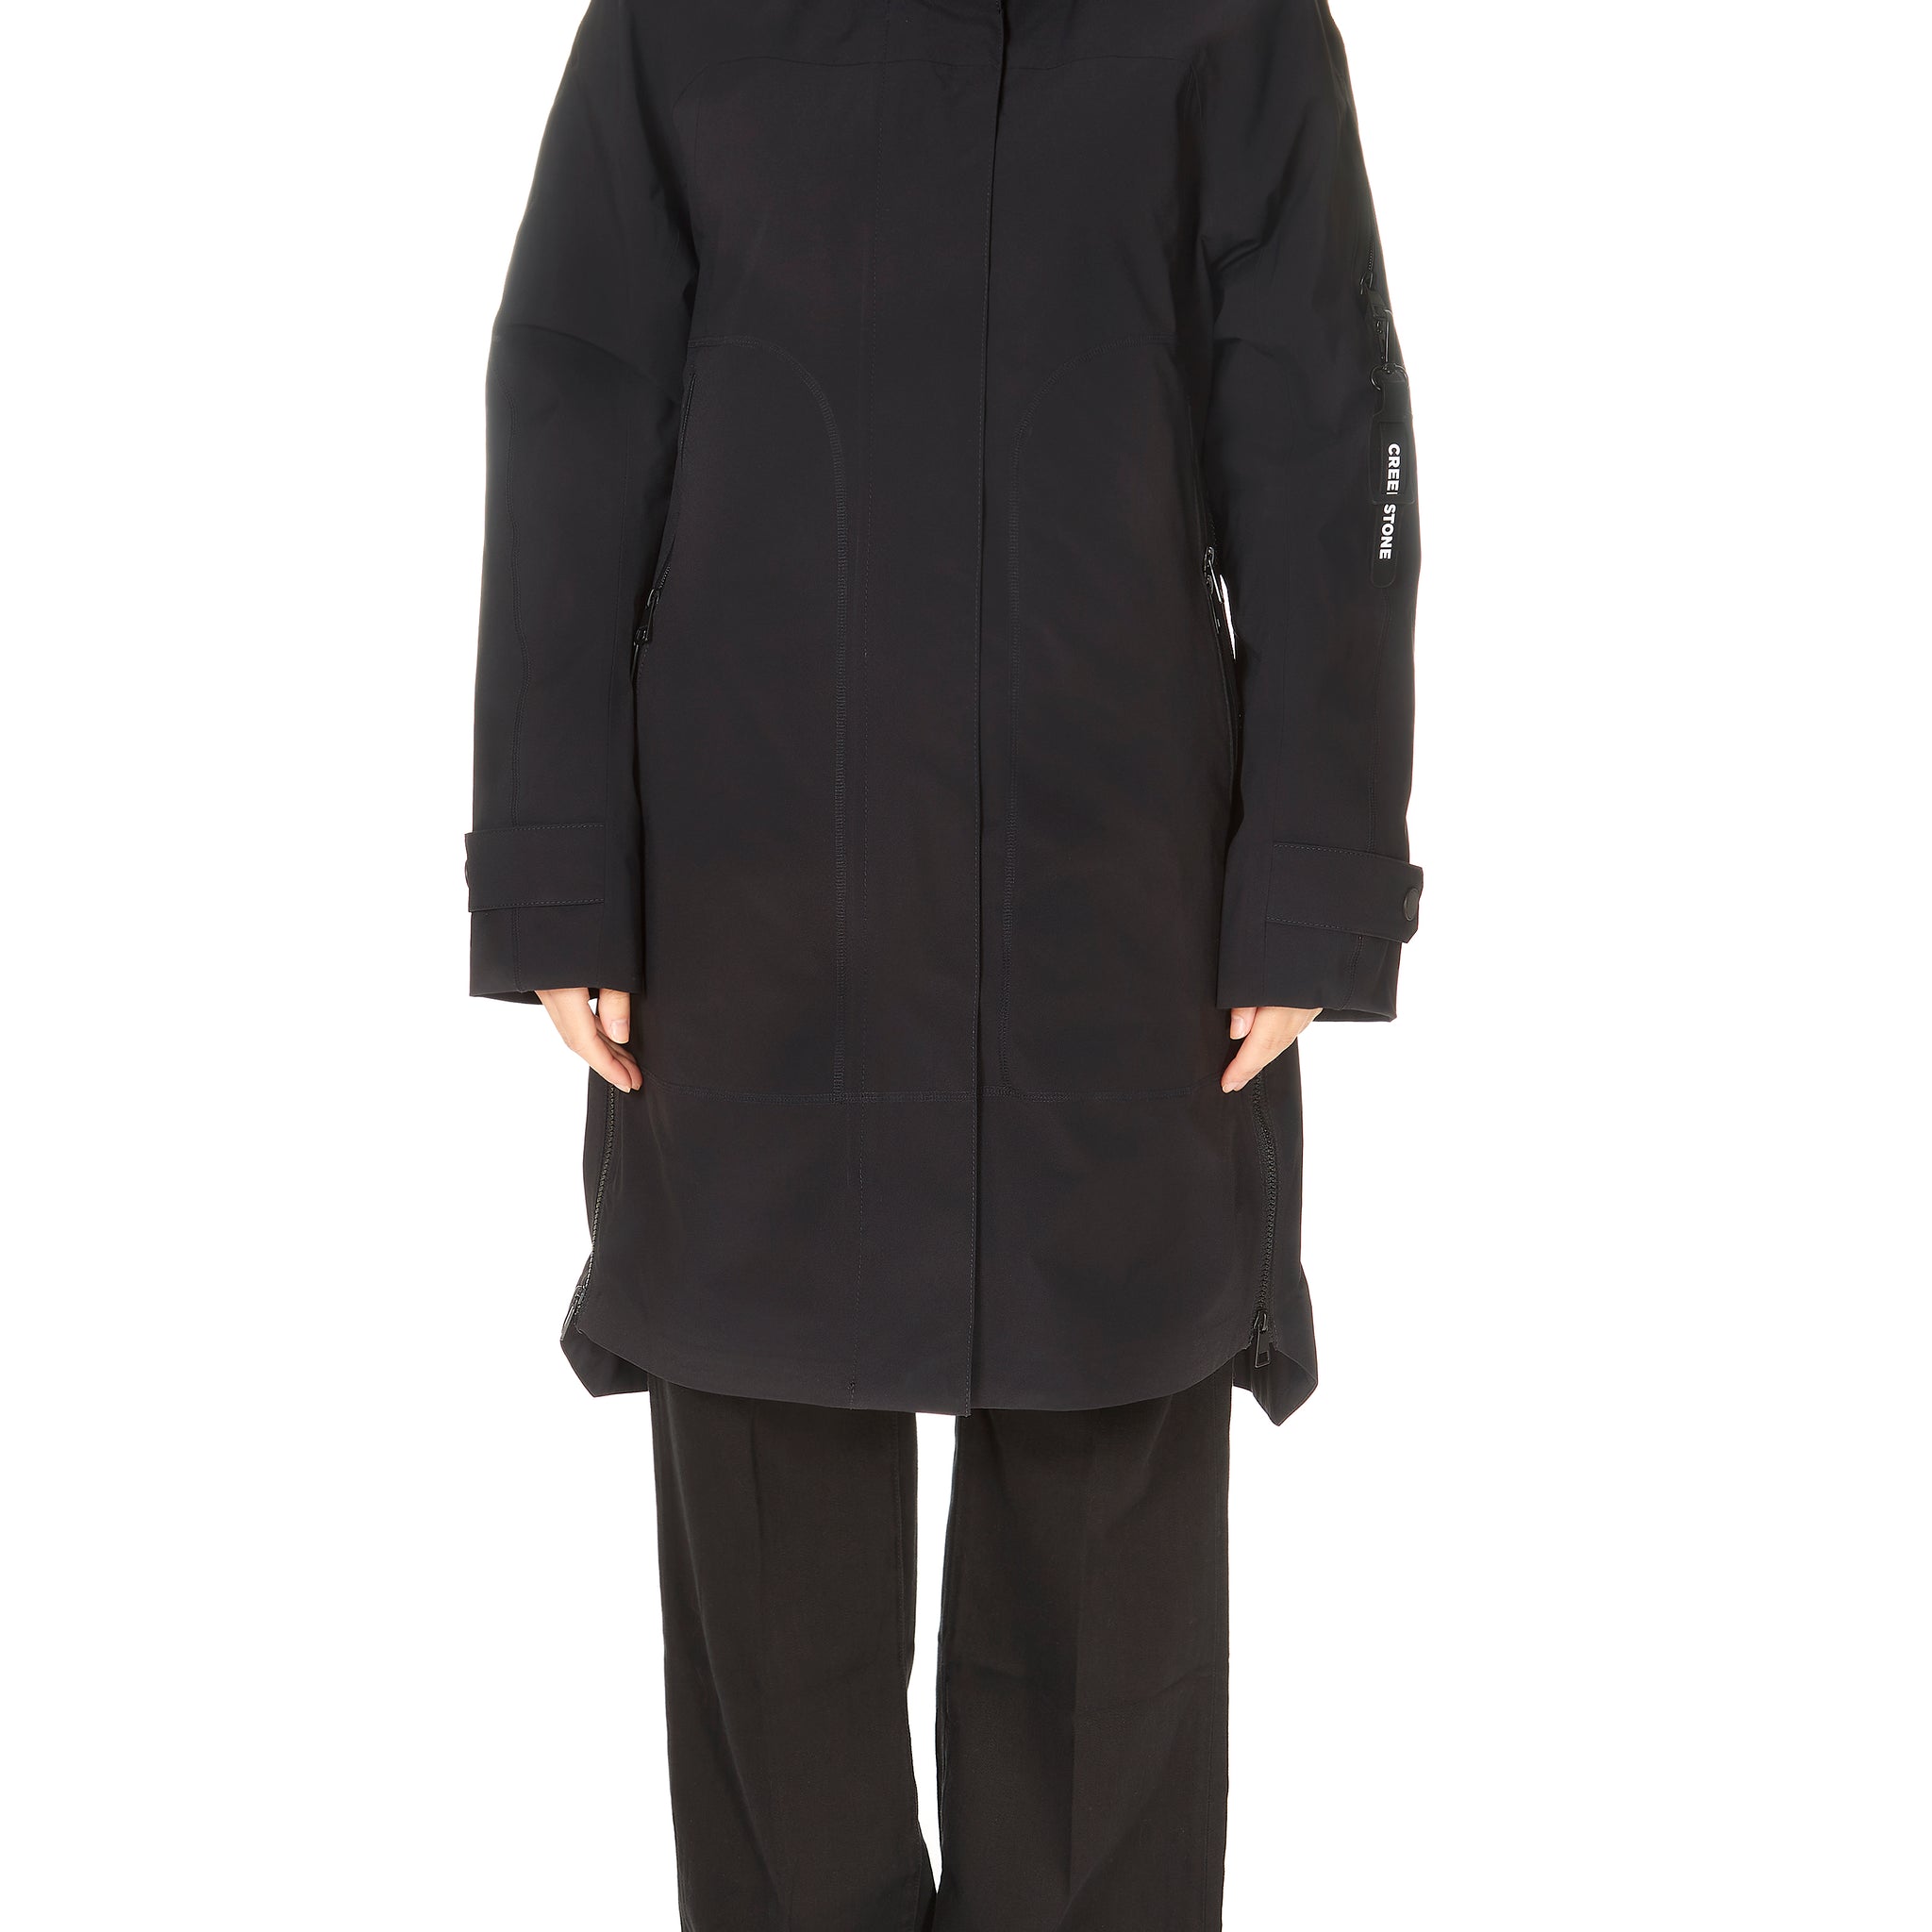 Creenstone Raincoat with Detachable Inside Jacket Black